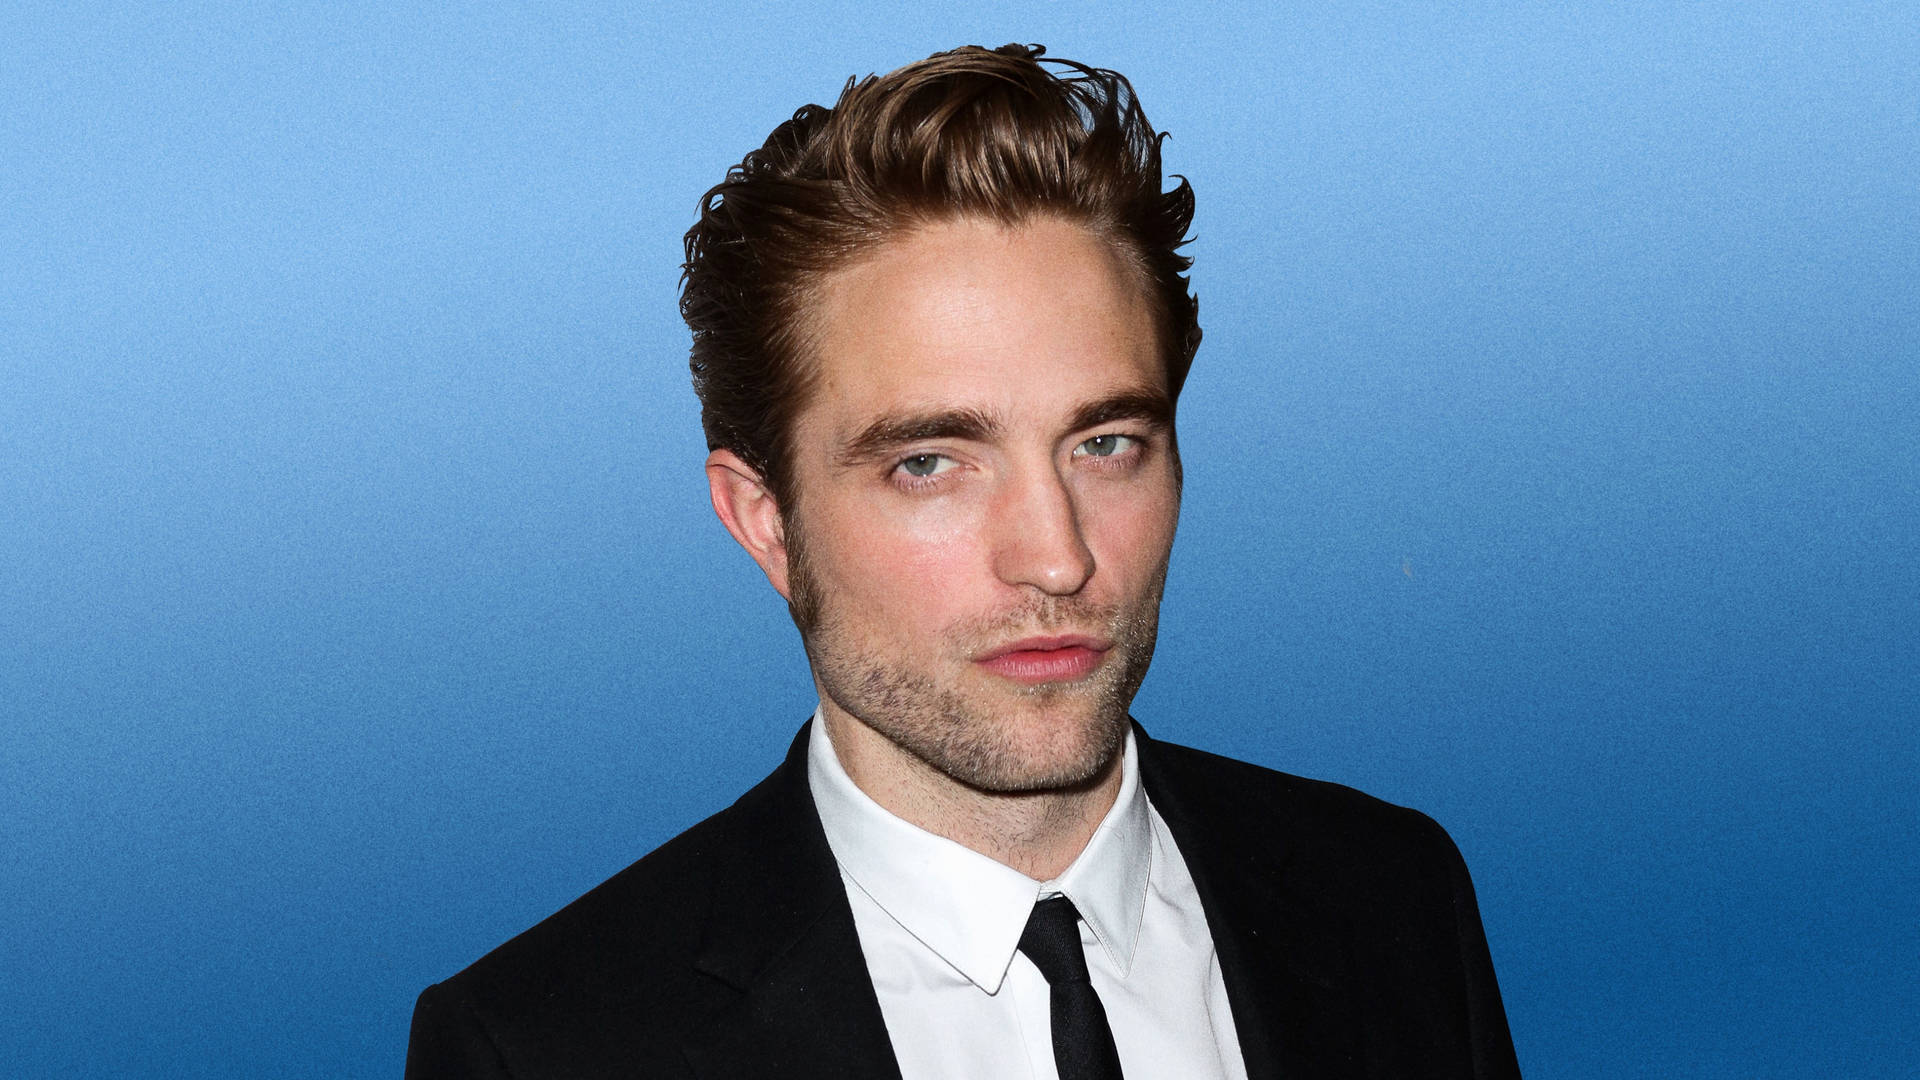 Robert Pattinson In Suit Background